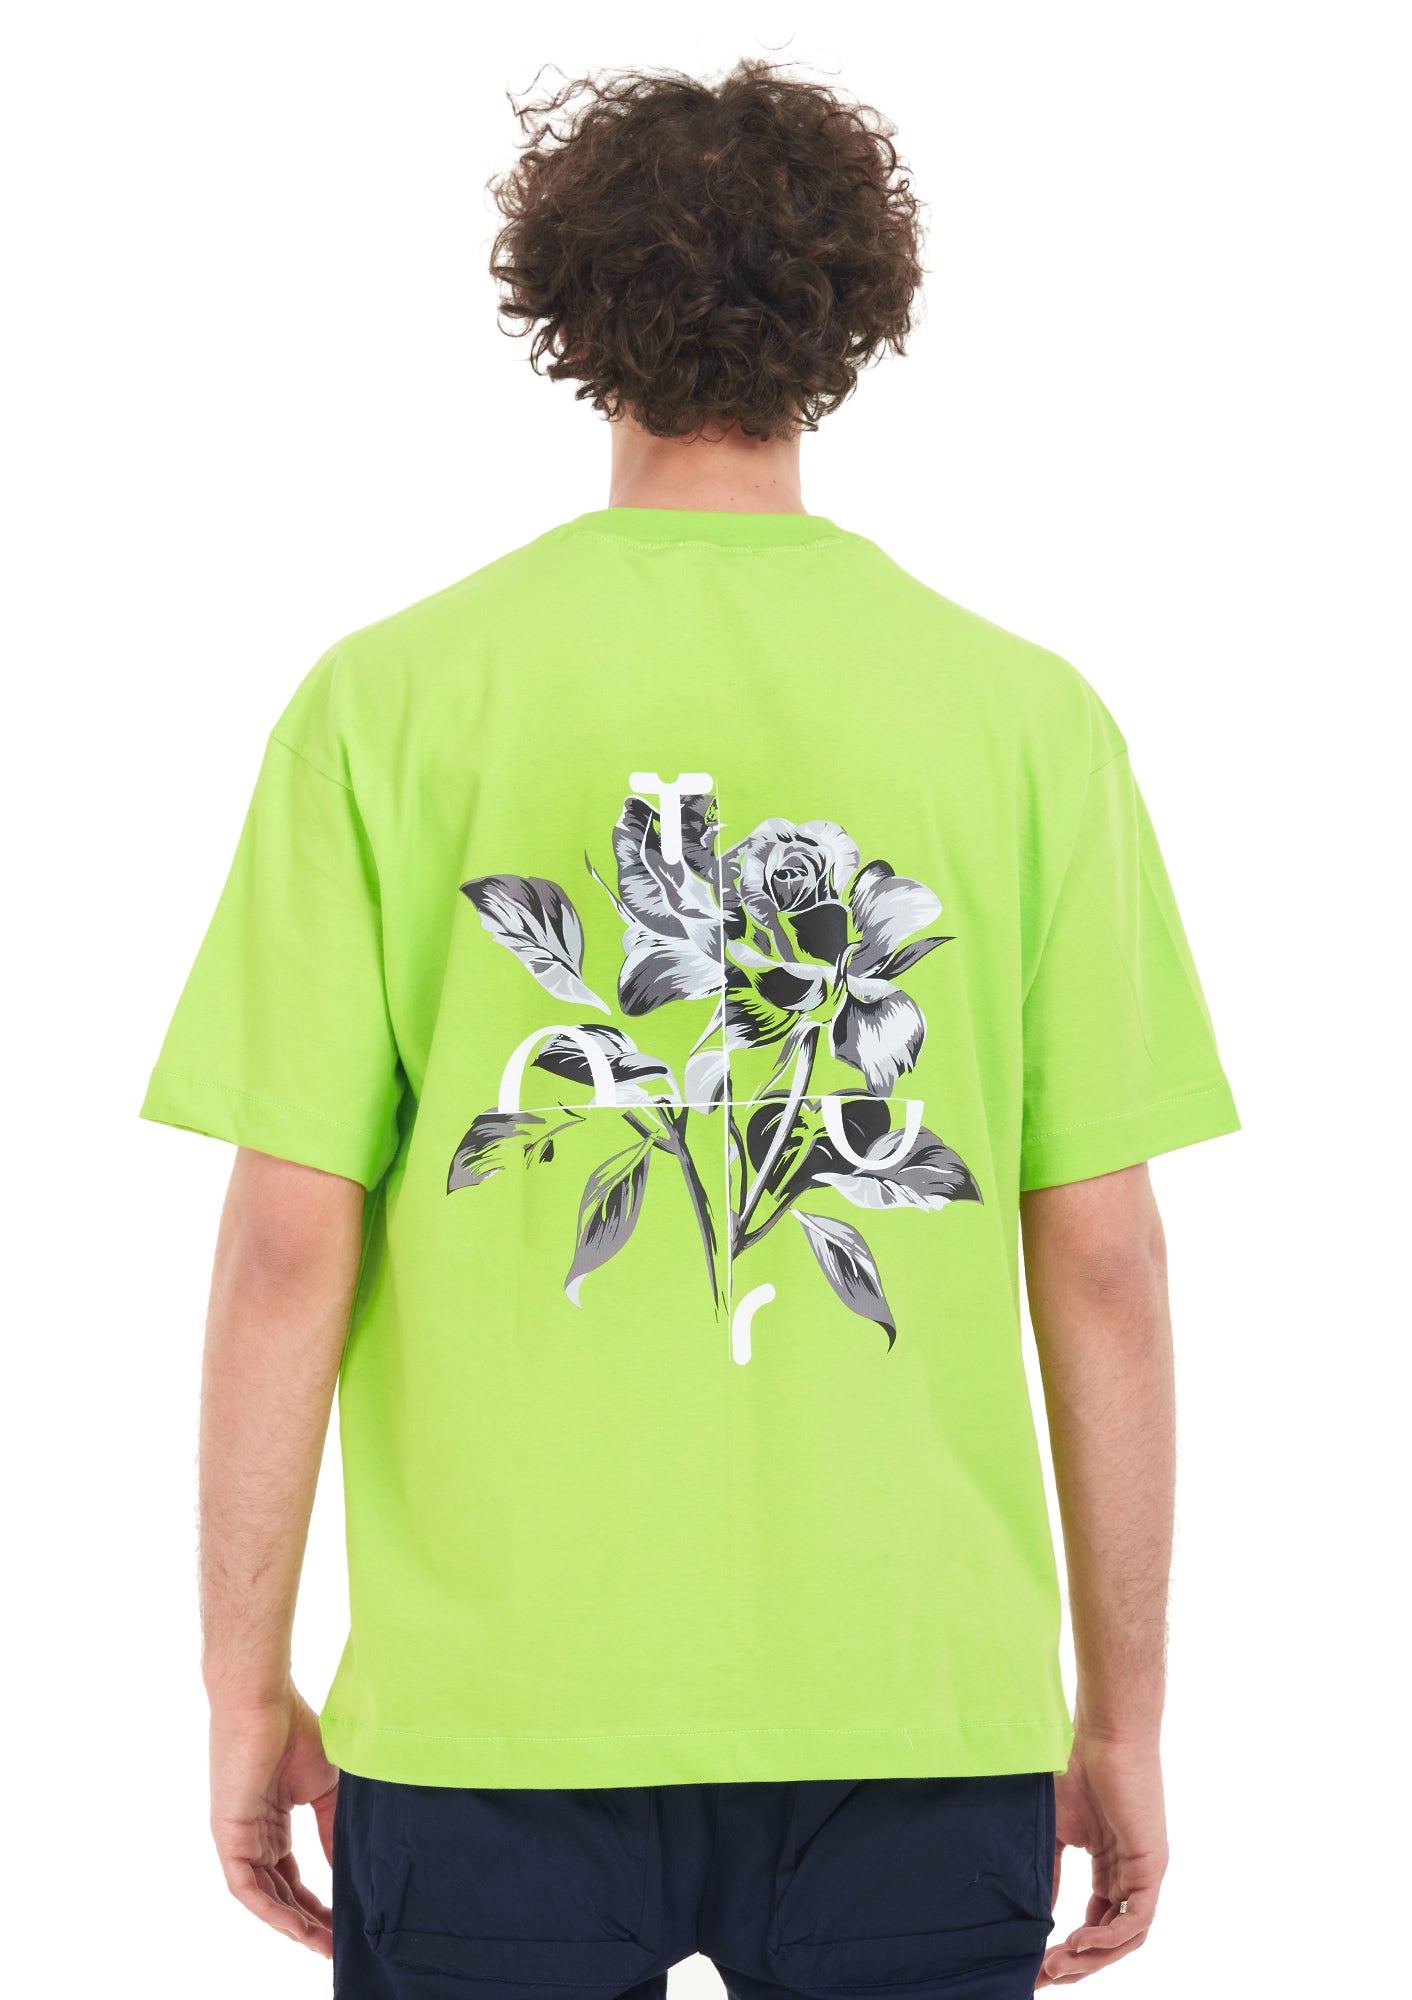 Flower tee Oversized printed Green apple T-shirt .